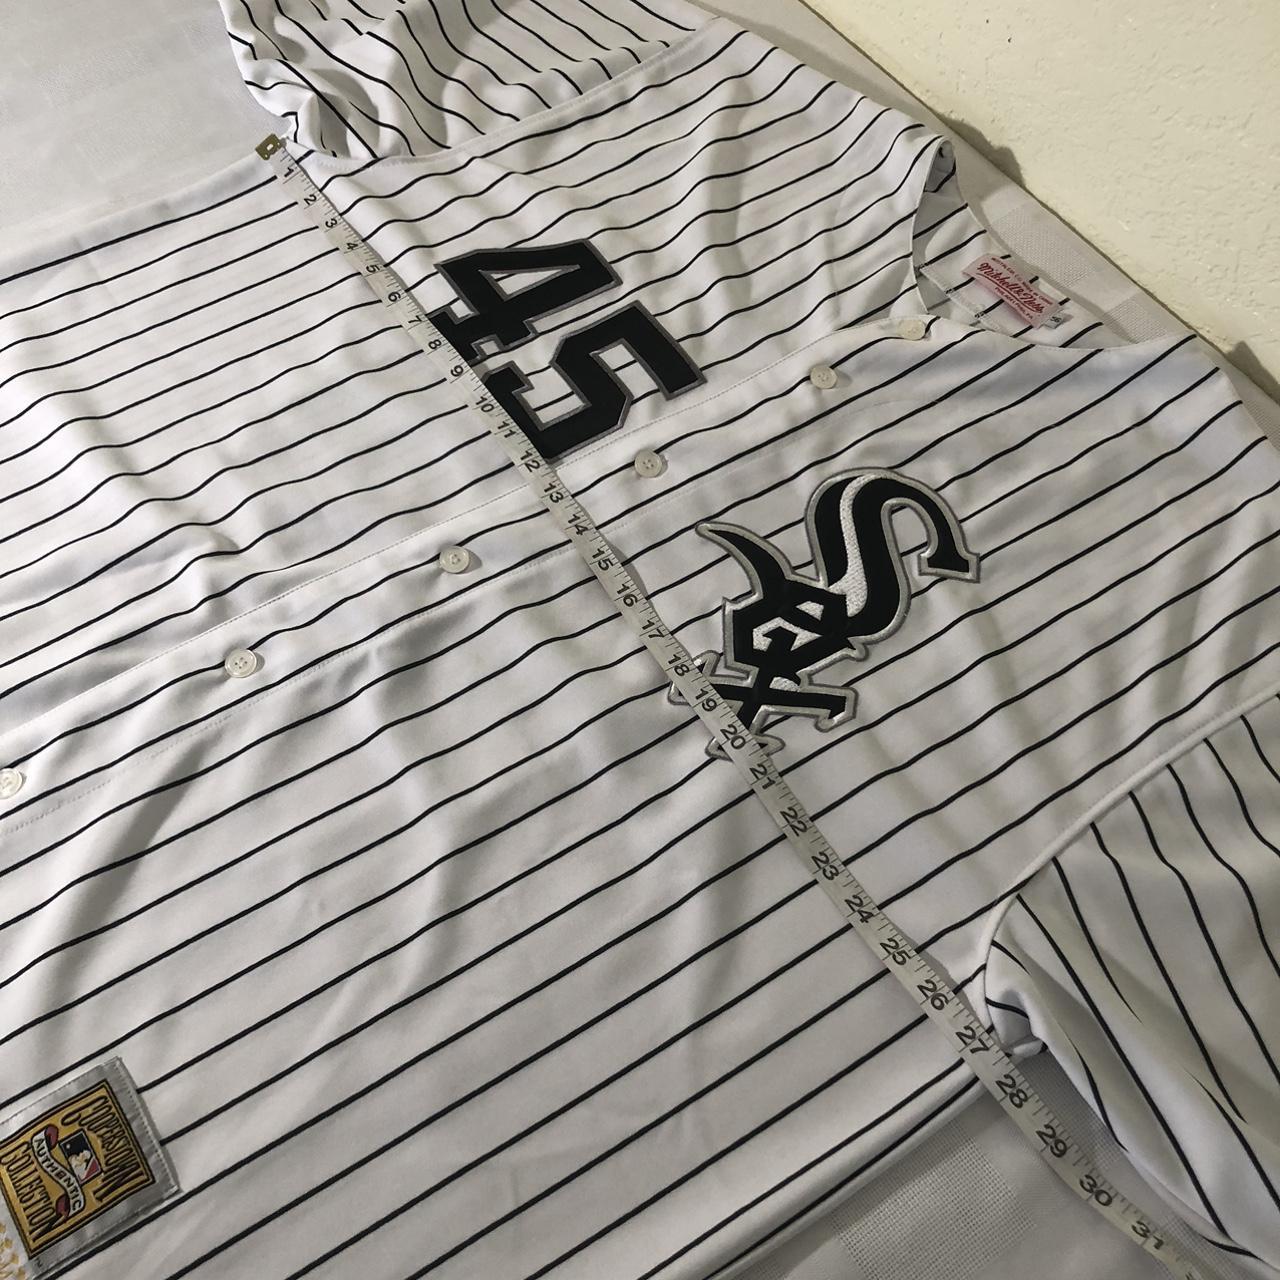 Majestic Michael Jordan Sz 40 Baseball Jersey #45 Chicago White Sox Vtg  Shirt